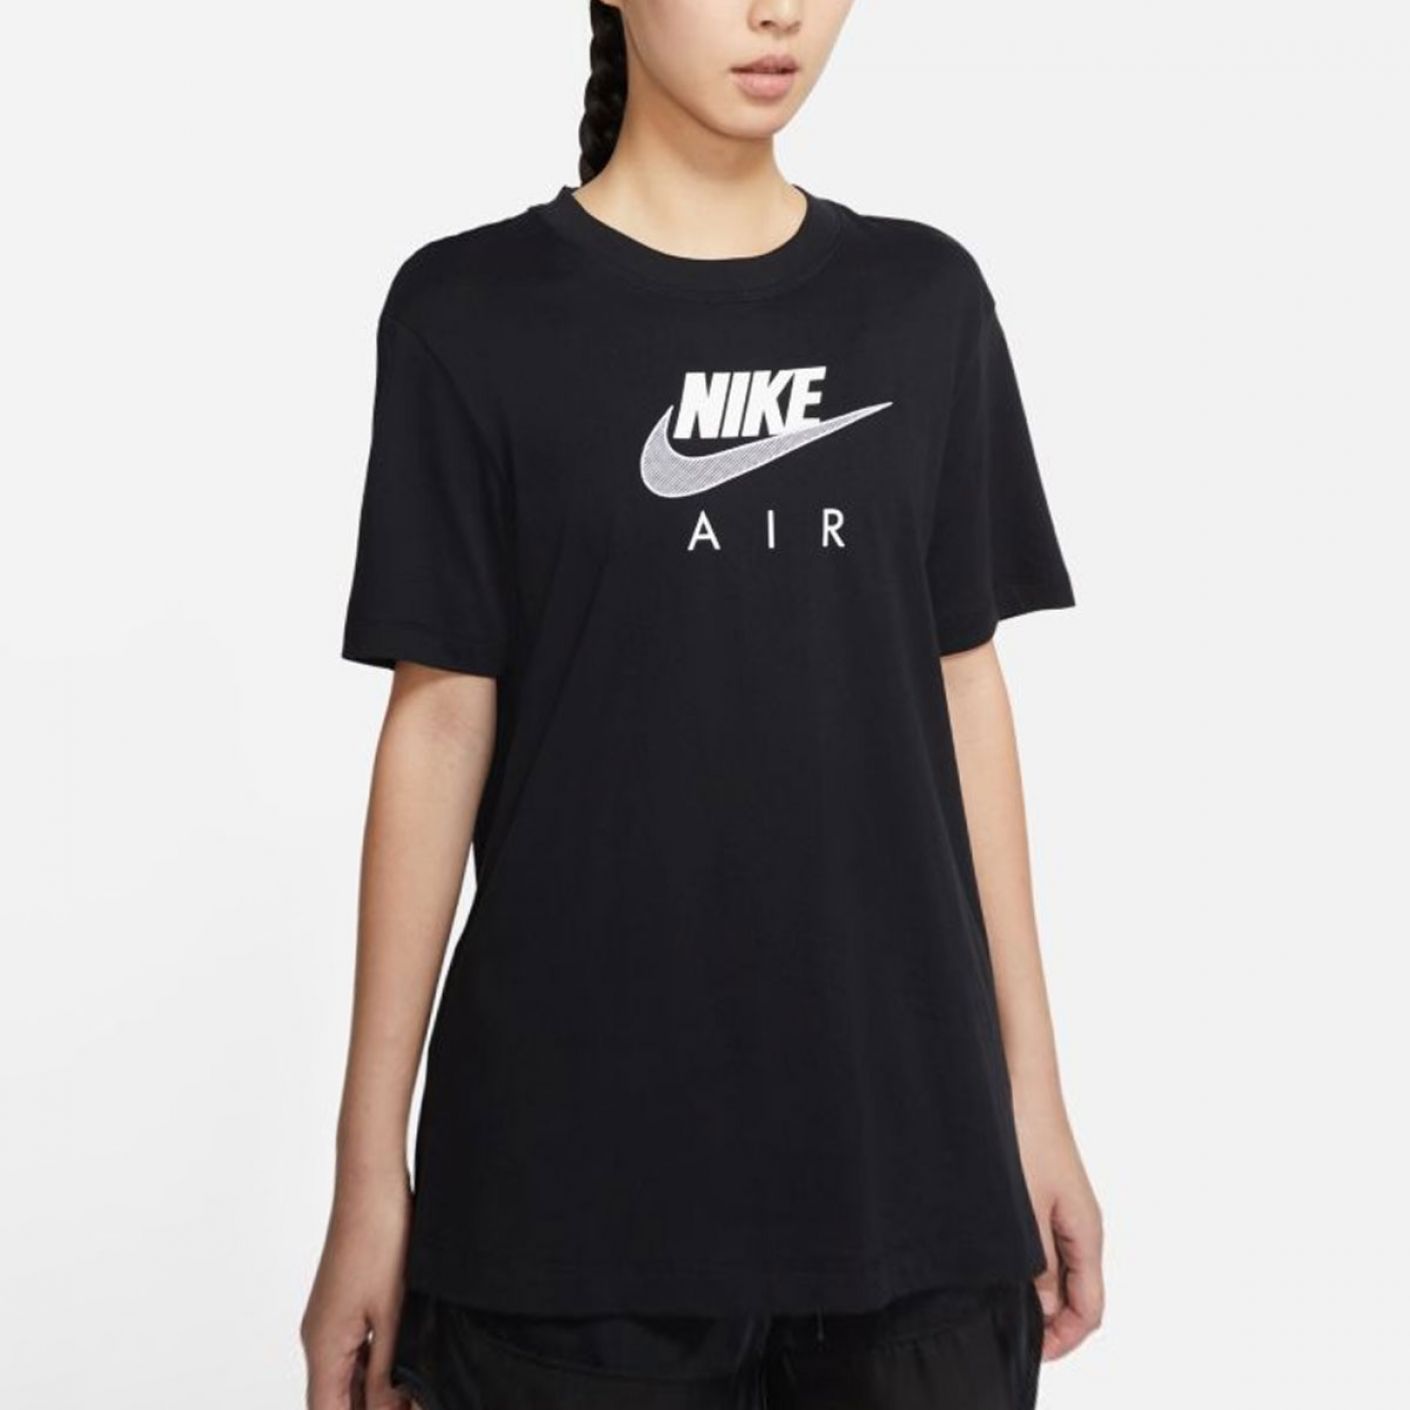 Nike Women's Air Tee Black T-shirt